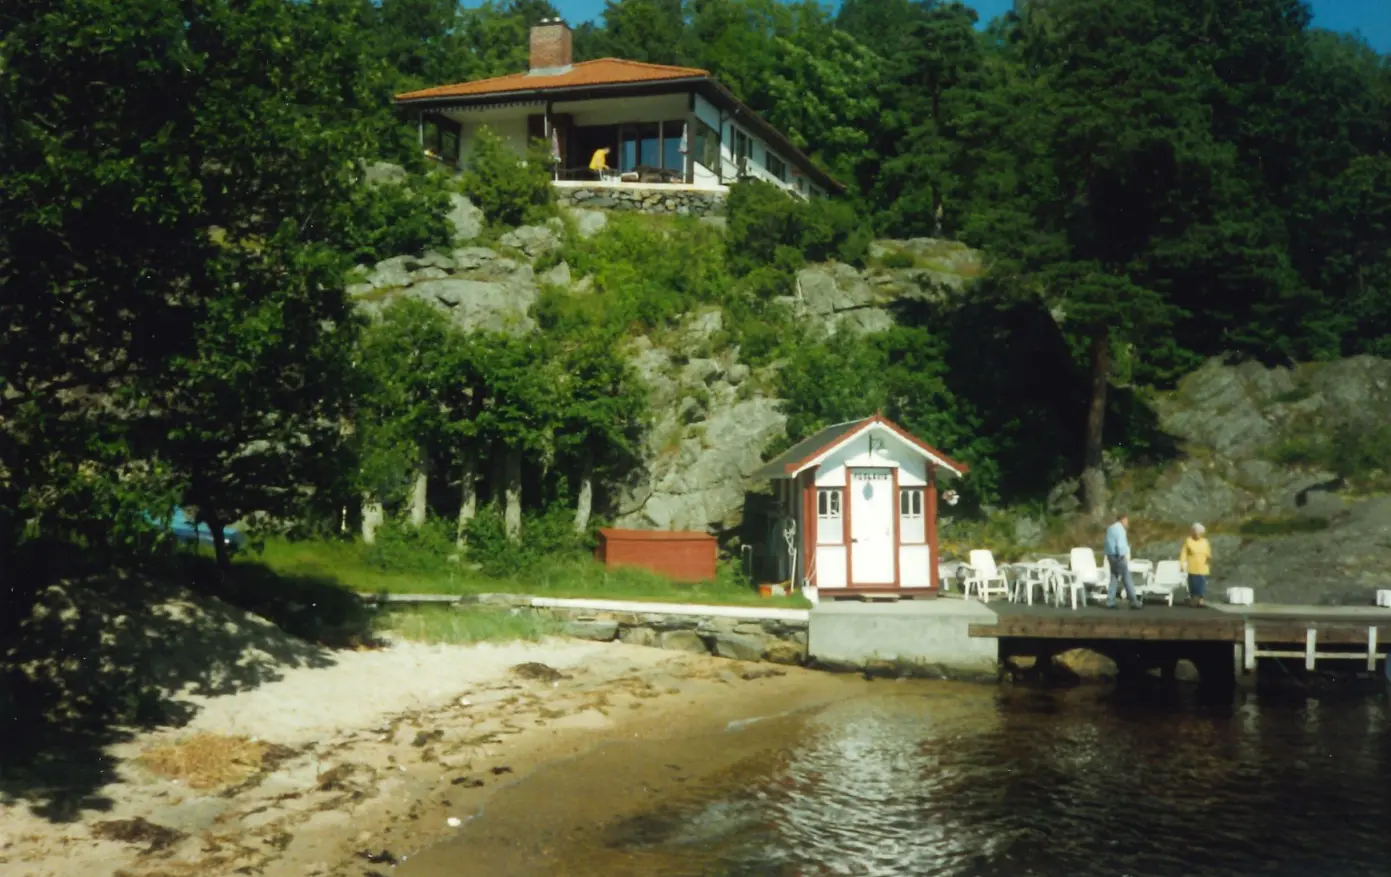 Børskiosken er hvitmalt, med røde detaljer, og står på en brygge ved en strand i Fugelviksund på Søm.